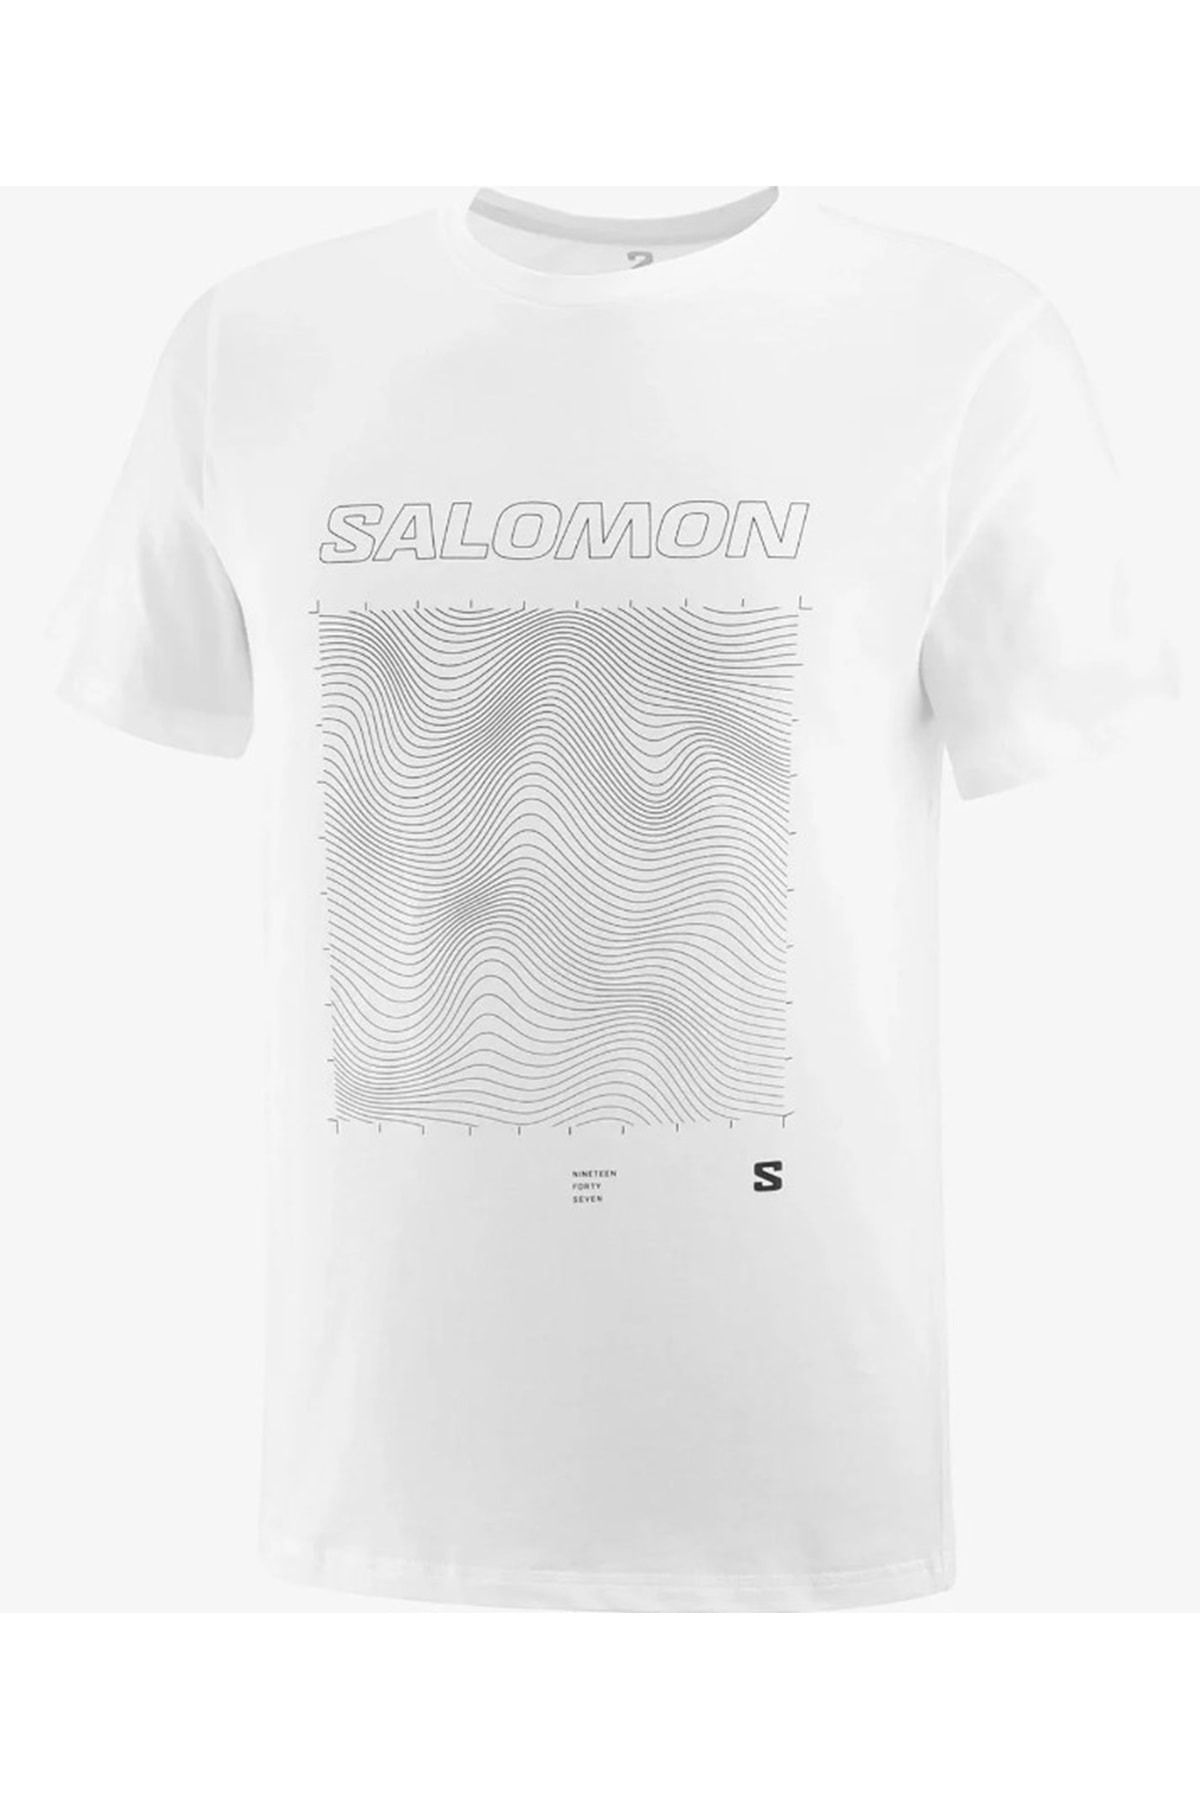 Salomon LC2219200 Graphic SS Tee Tişört Erkek T-Shirt BEYAZ